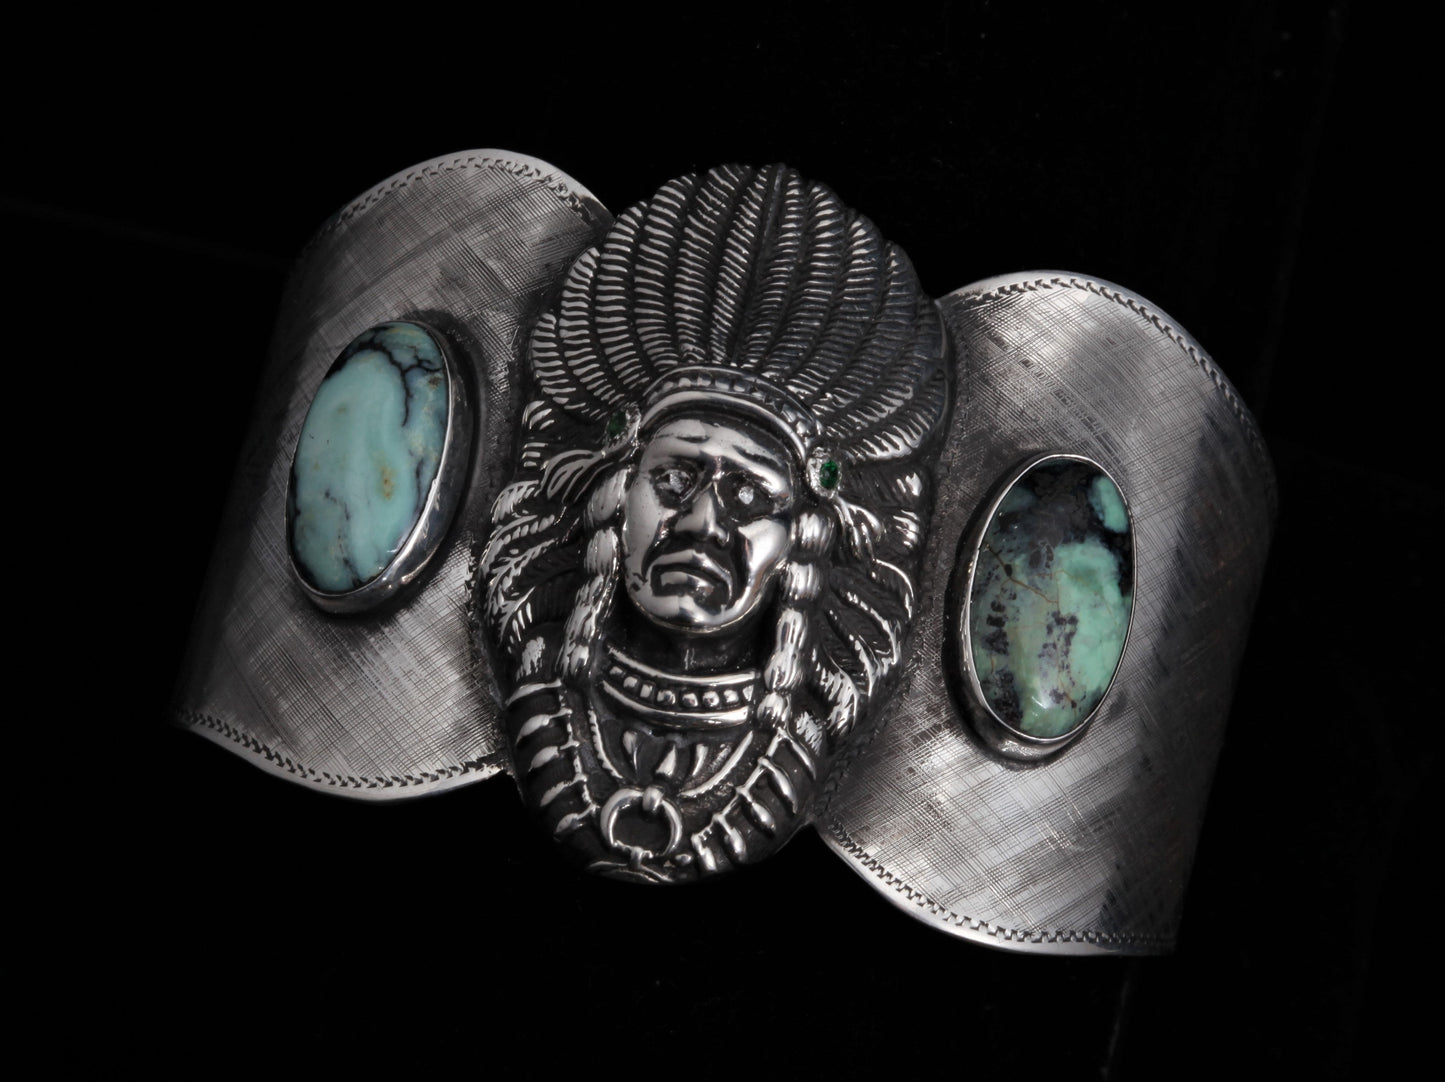 Ute Chieftan Cuff Bracelets Comstock Heritage 